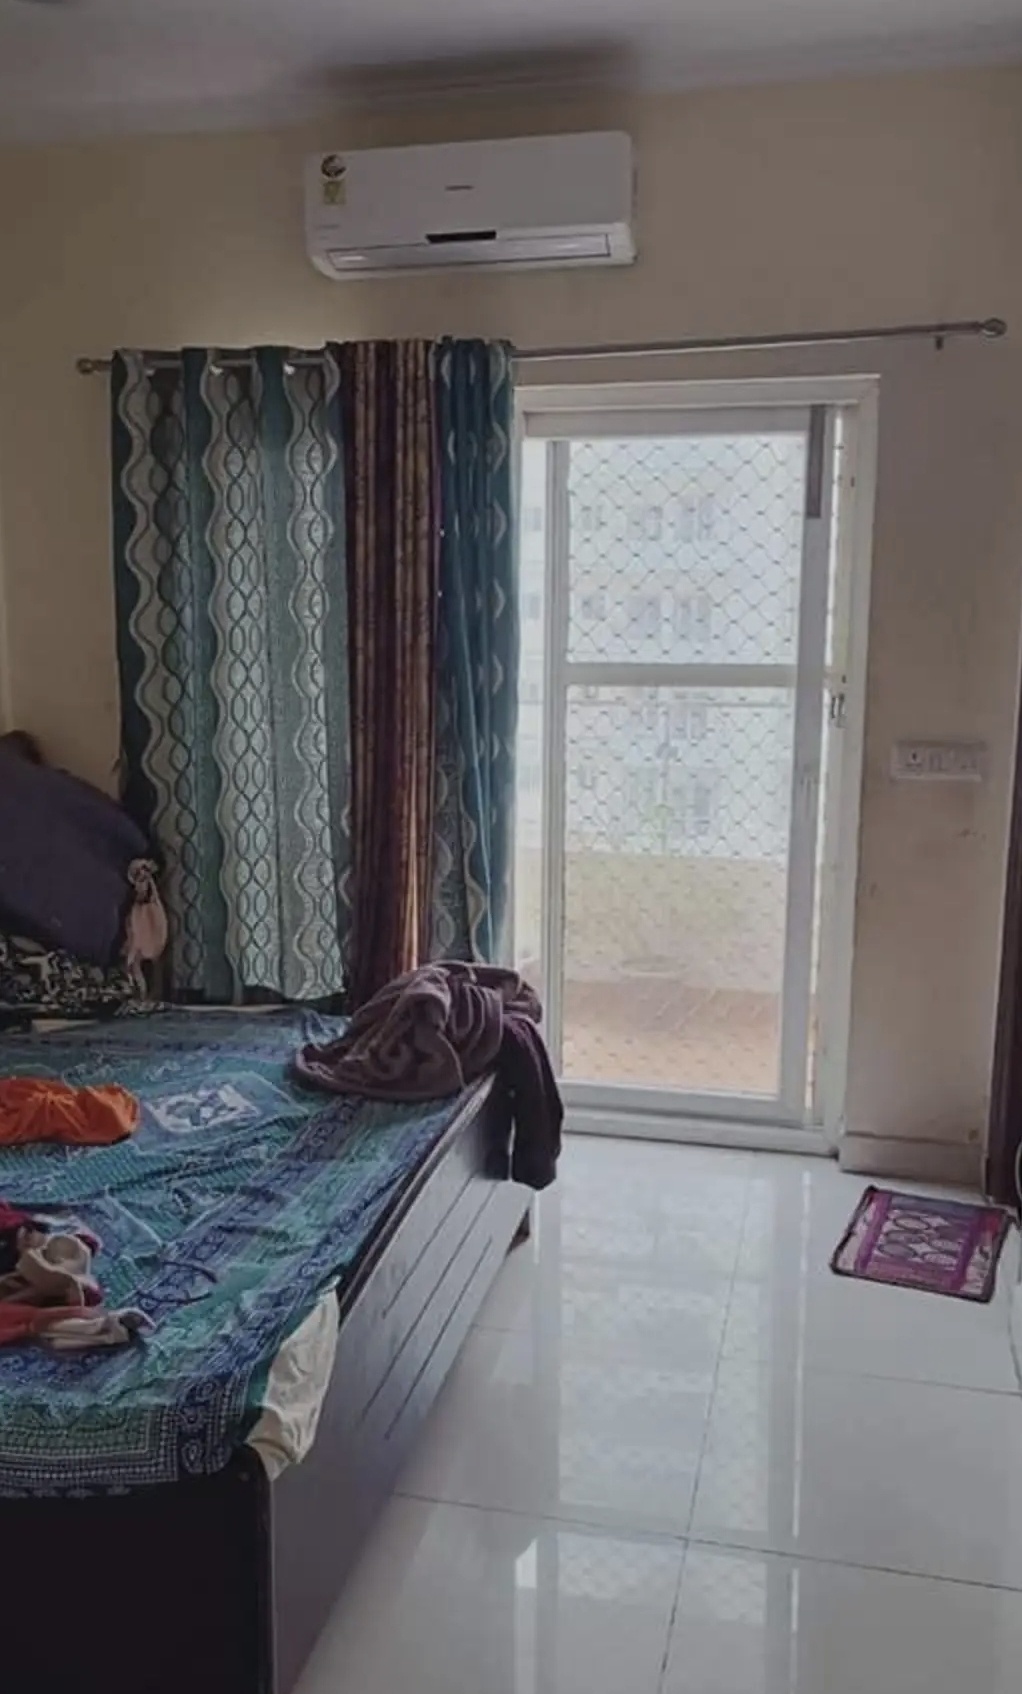 2 Bed/ 2 Bath Apartment/ Flat, Furnished for rent @Ek murti chowk goal chaker near gaur city mall sector 16b